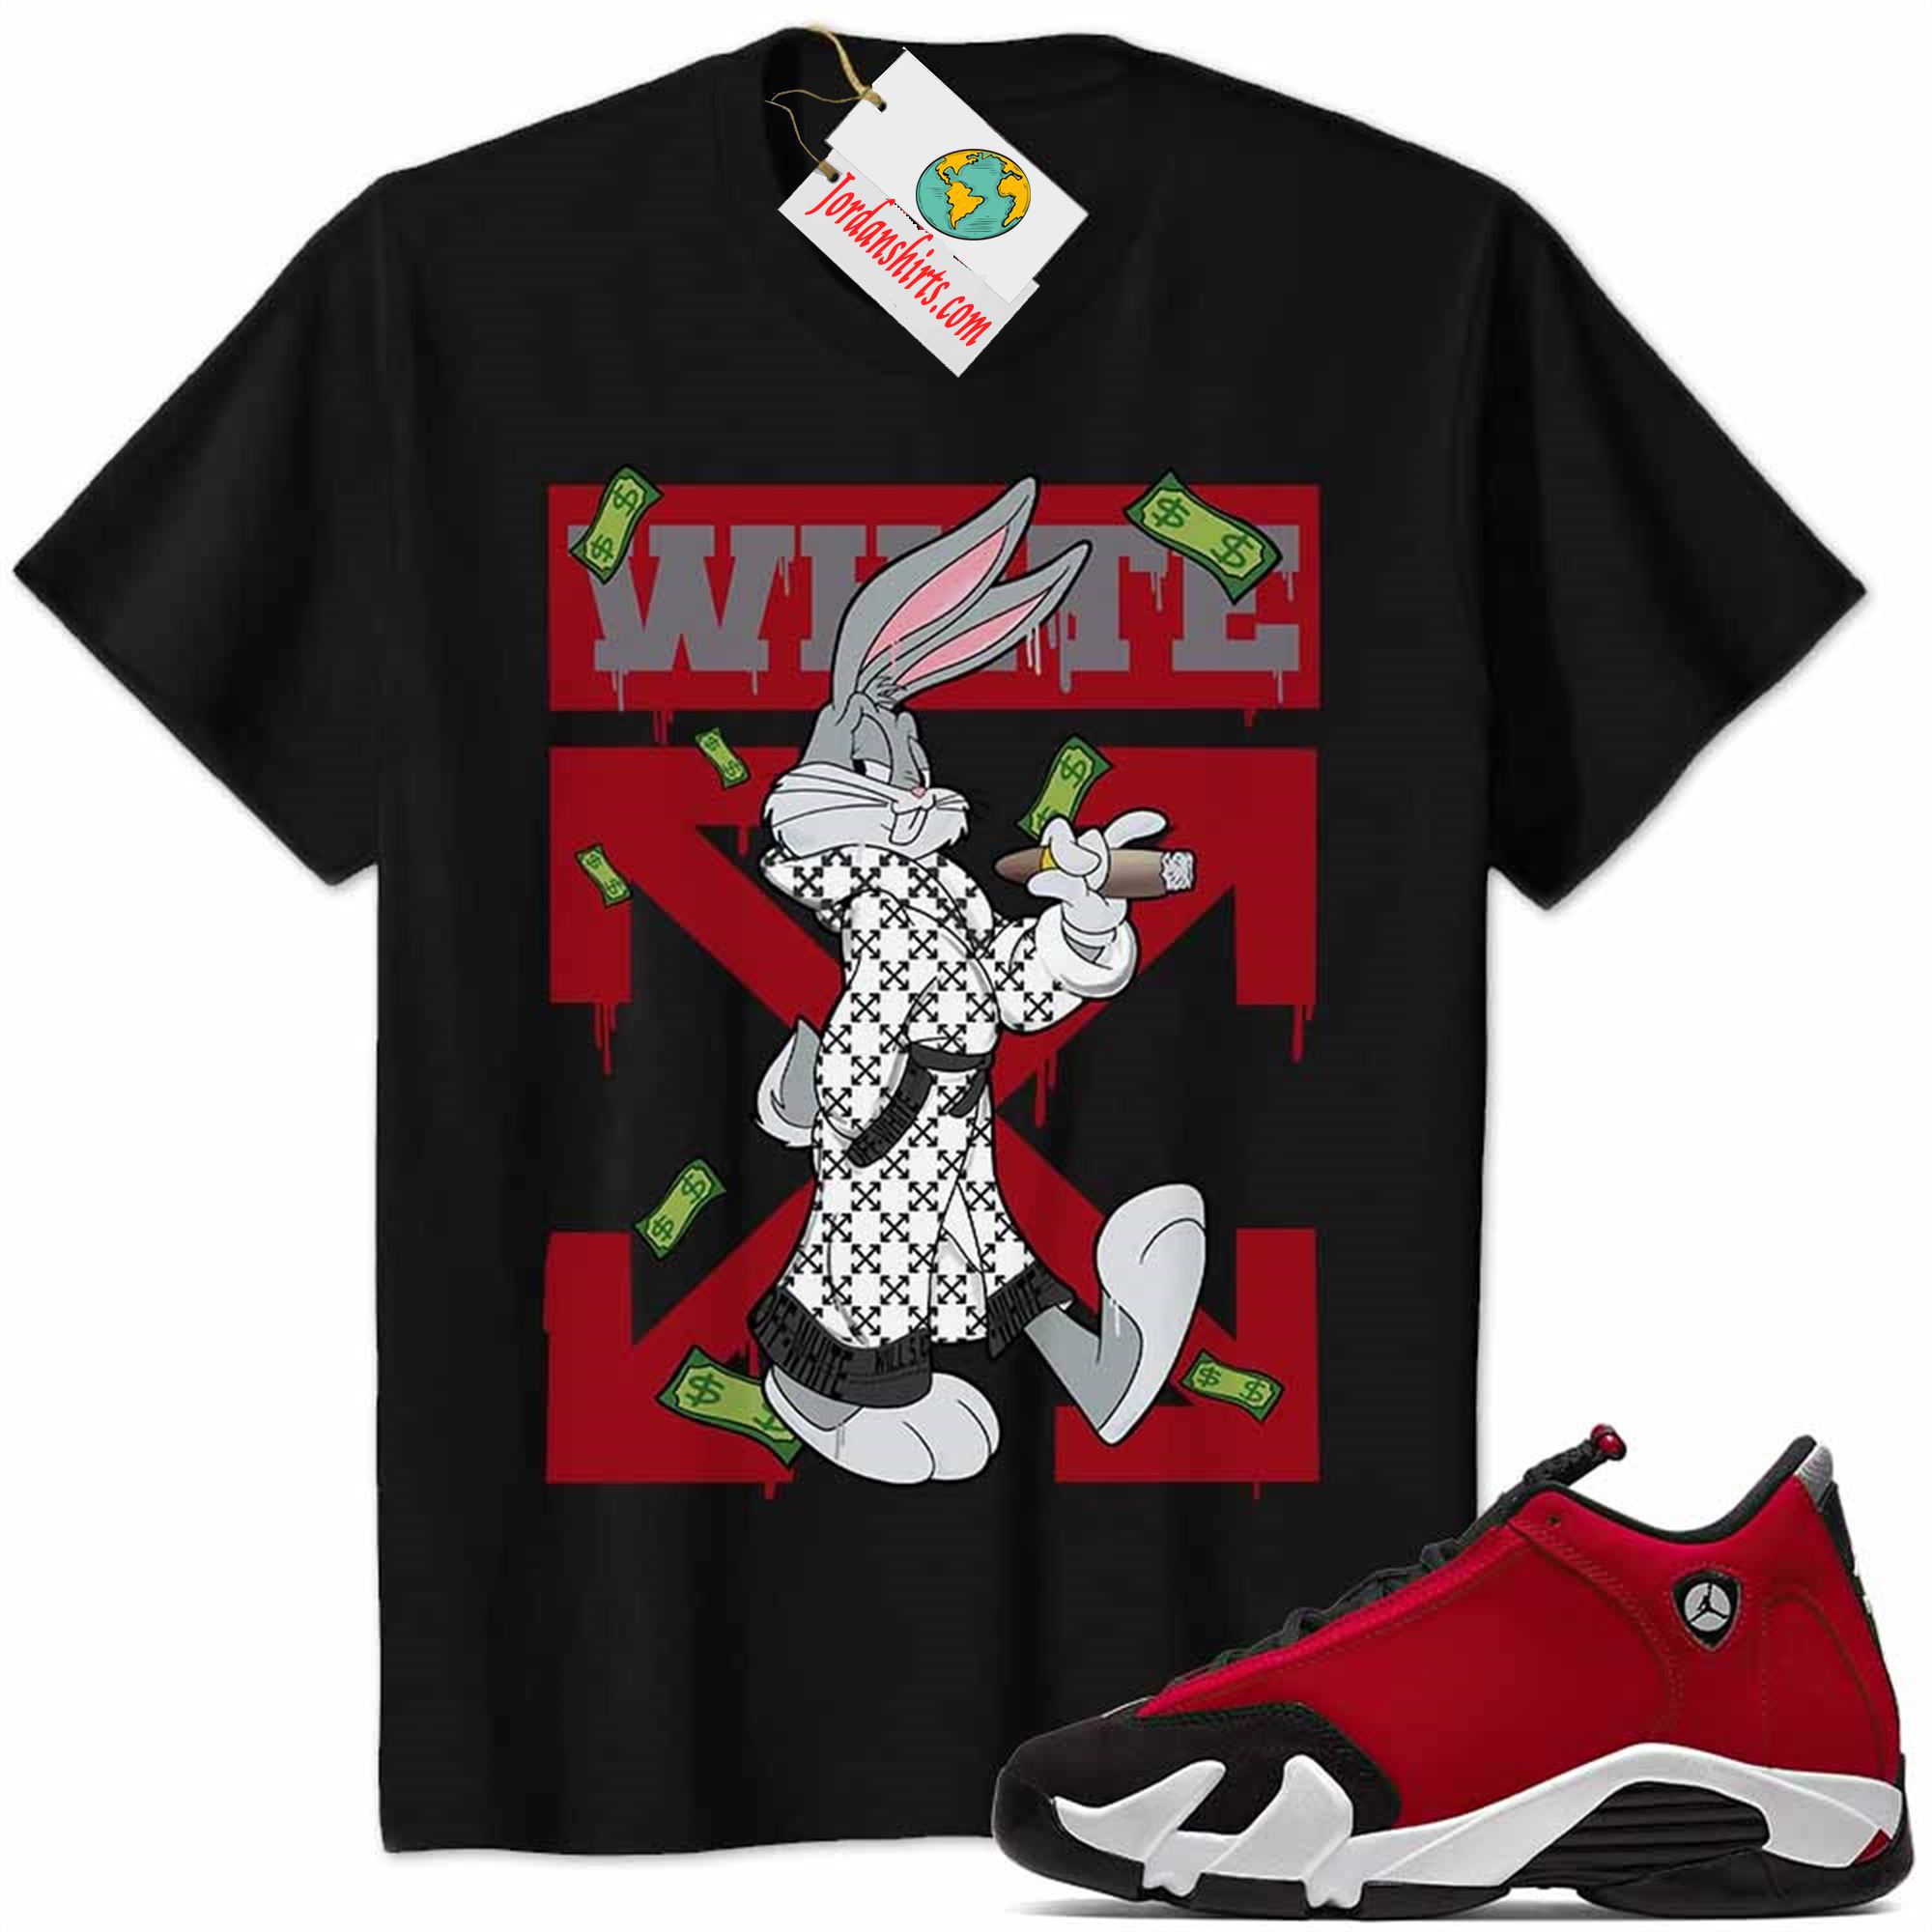 Jordan 14 Shirt, Jordan 14 Gym Red Shirt Bug Bunny Smokes Weed Money Falling Black Full Size Up To 5xl